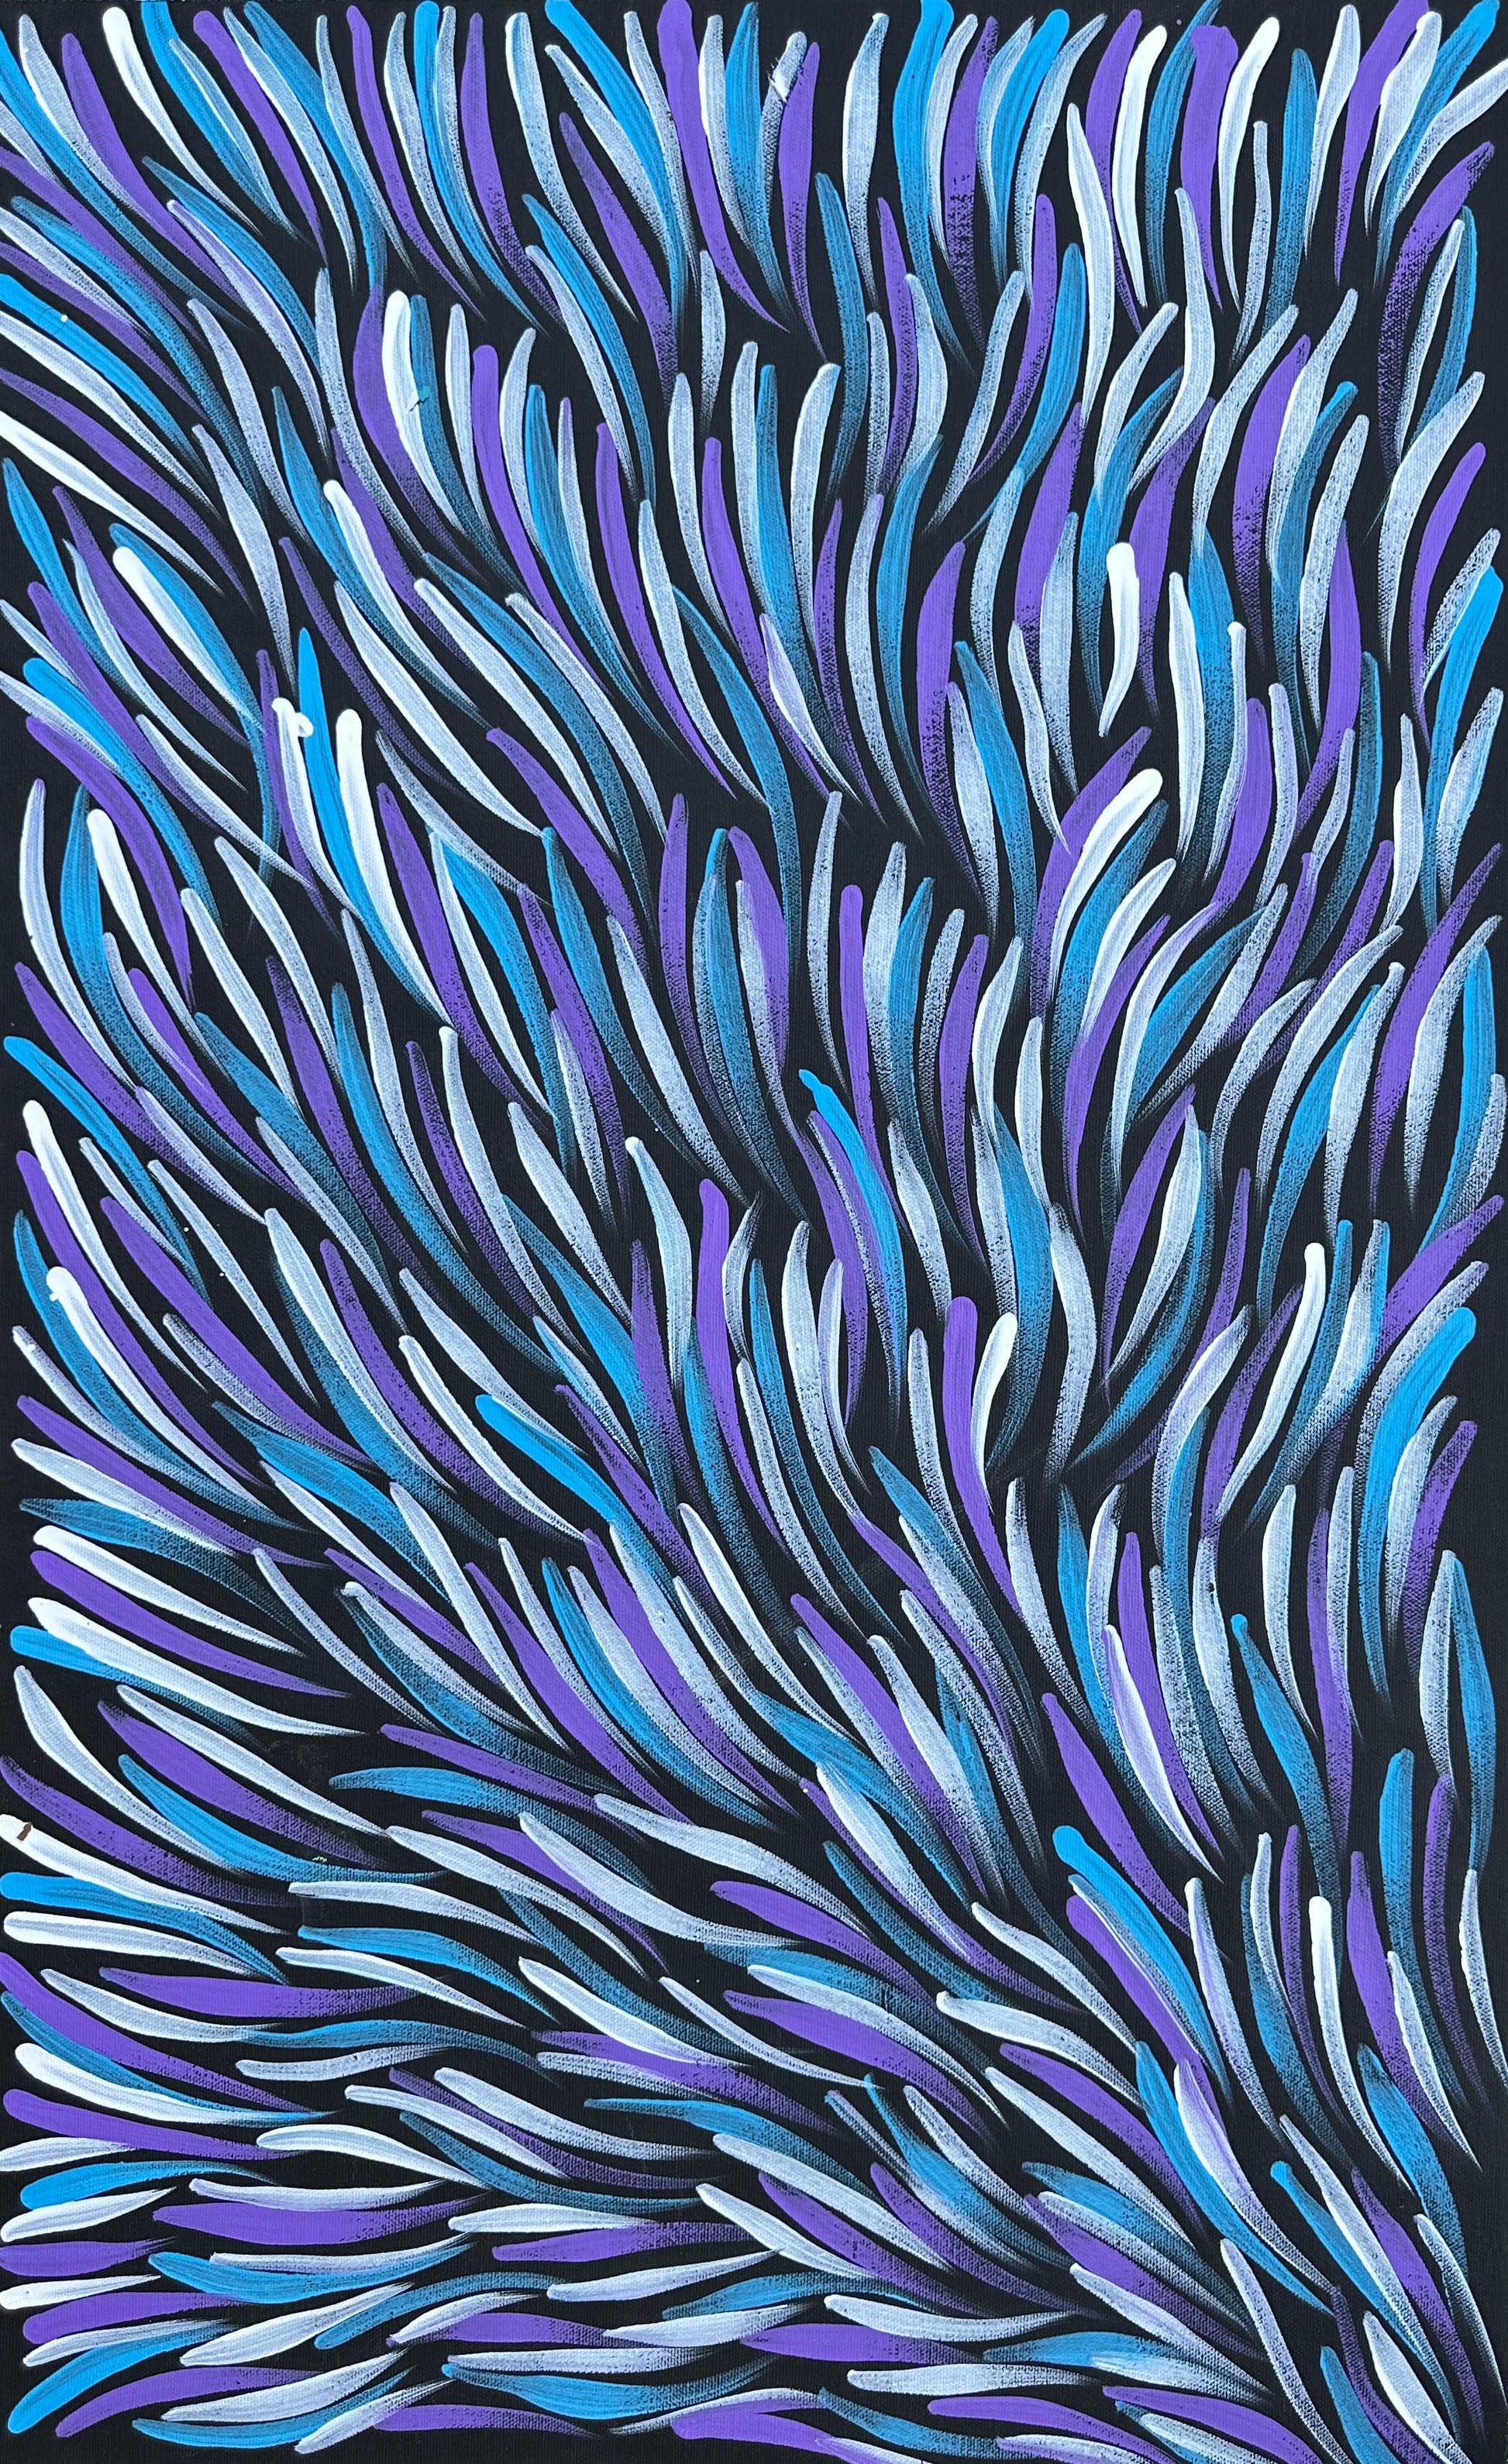 Rosemary Pitjara Petyarre + Utopia + Bush Medicine Leaves + Indigenous Art + Aboriginal Art + Australian Art + Purple + Blue + White + Darwin Based Gallery + Contemporary Art + Traditional Art